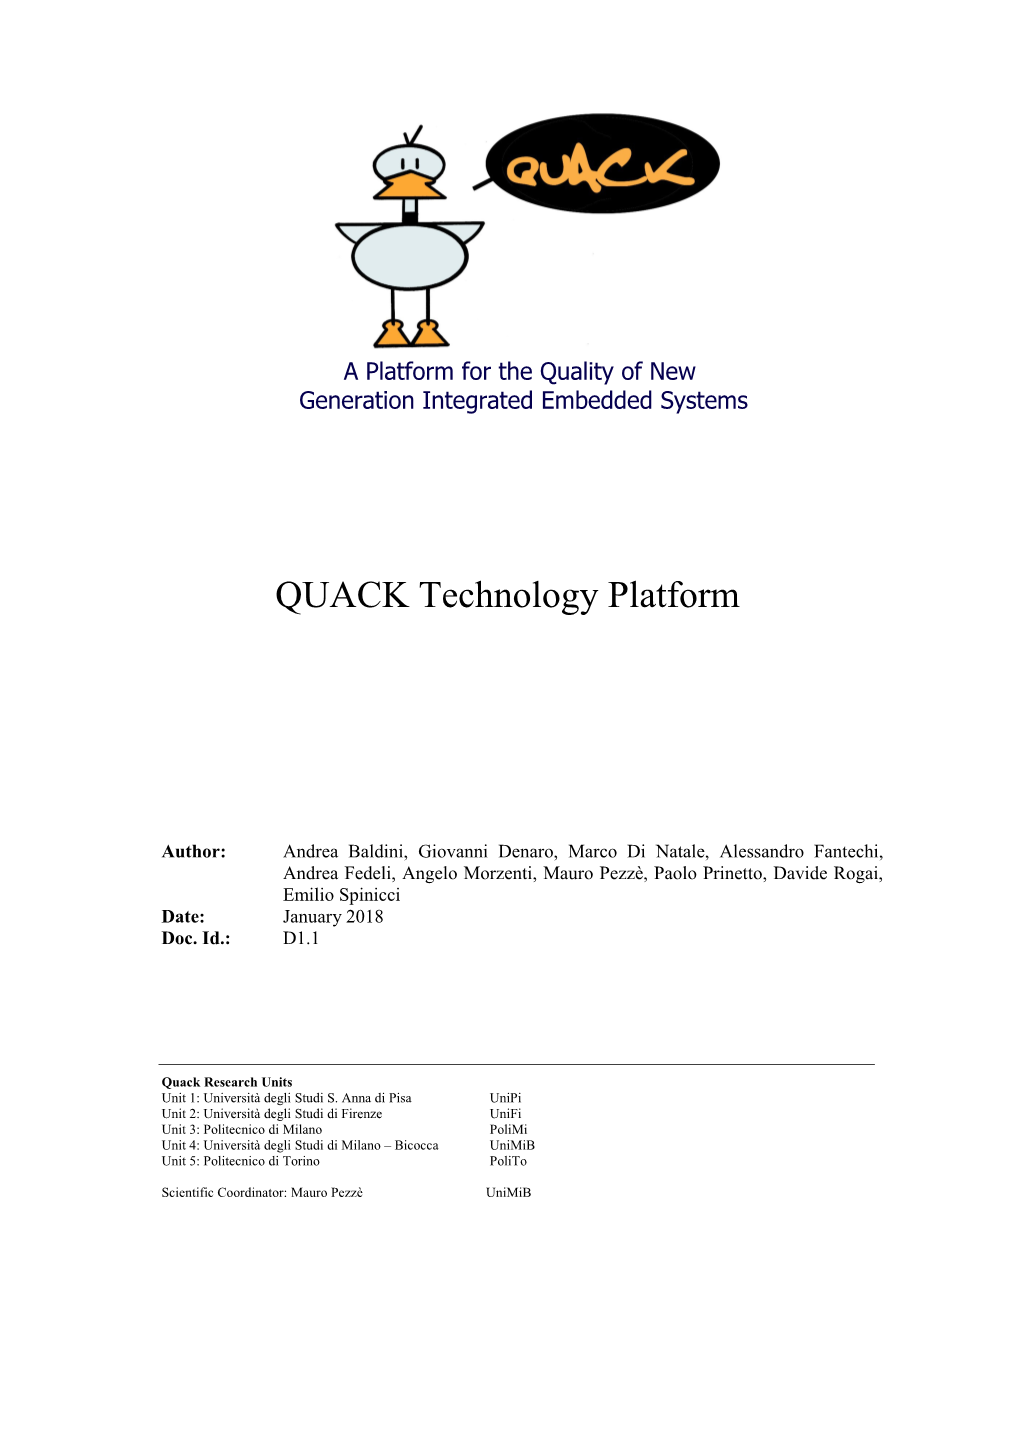 QUACK Technology Platform